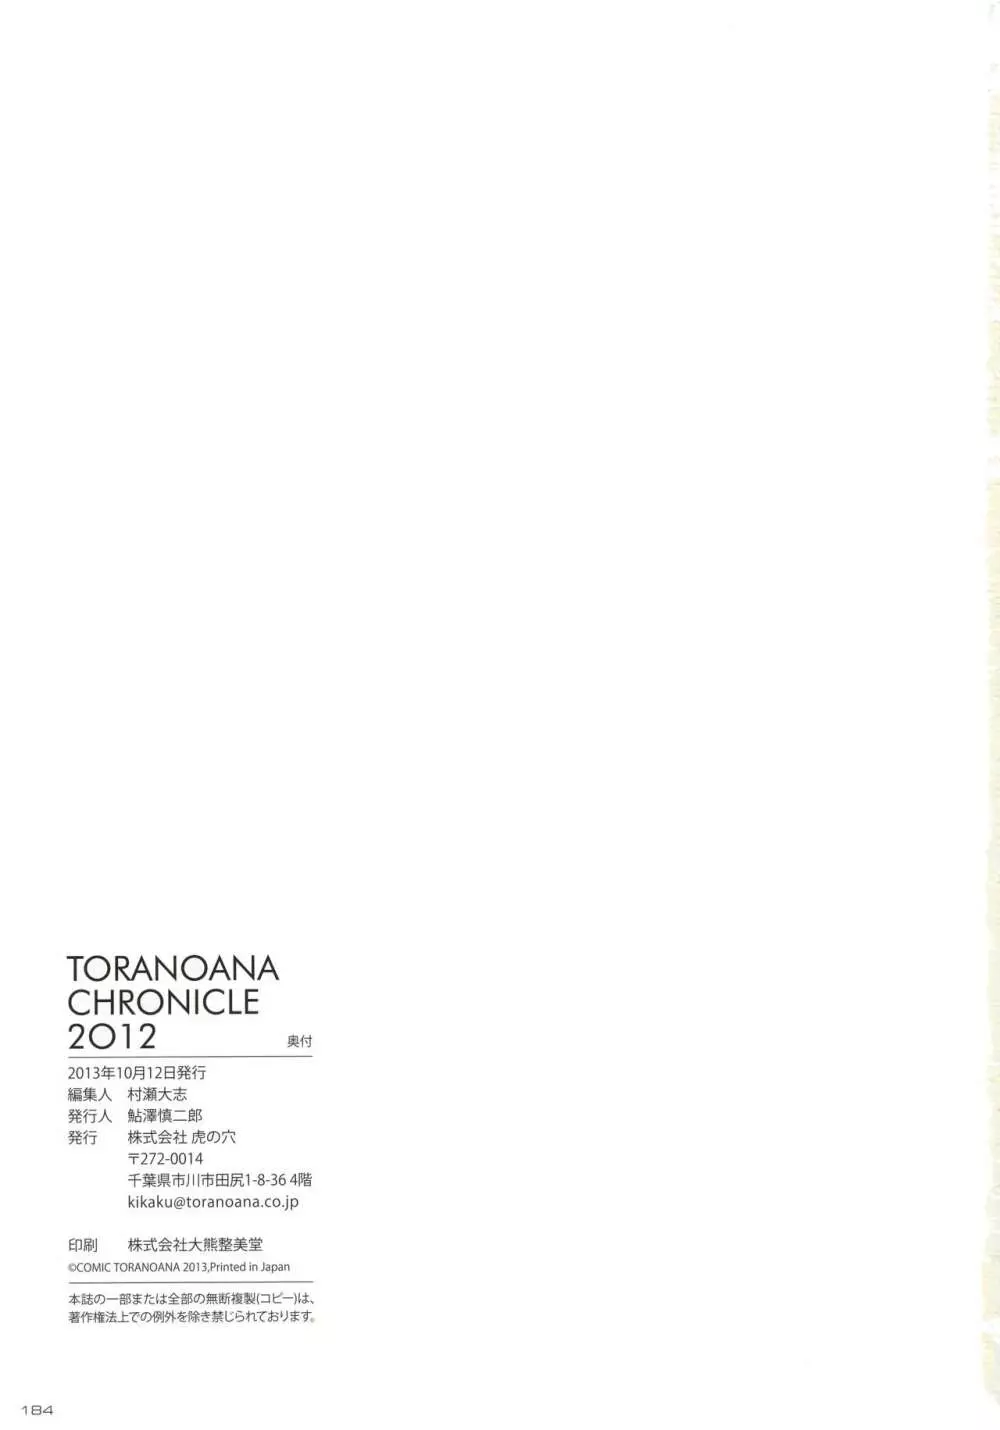 Toranoana Chronicle 2012 - page182